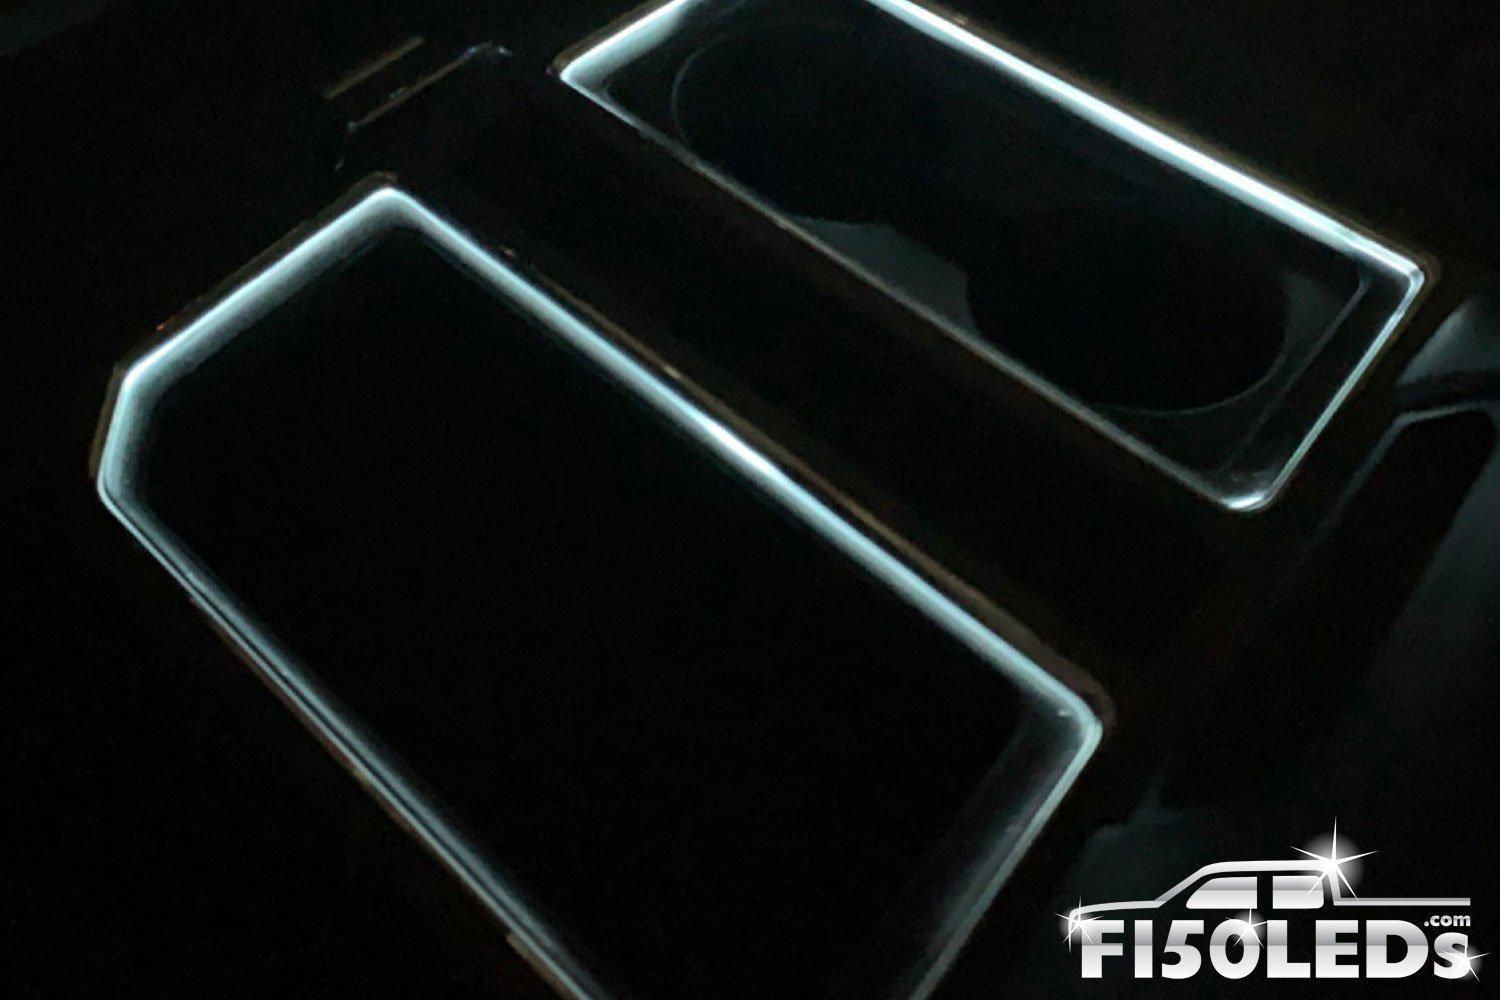 2015 - 2020 F150 Interior Cup Holder Ring Light Kit-2015-18 F150 LEDS-F150LEDs.com